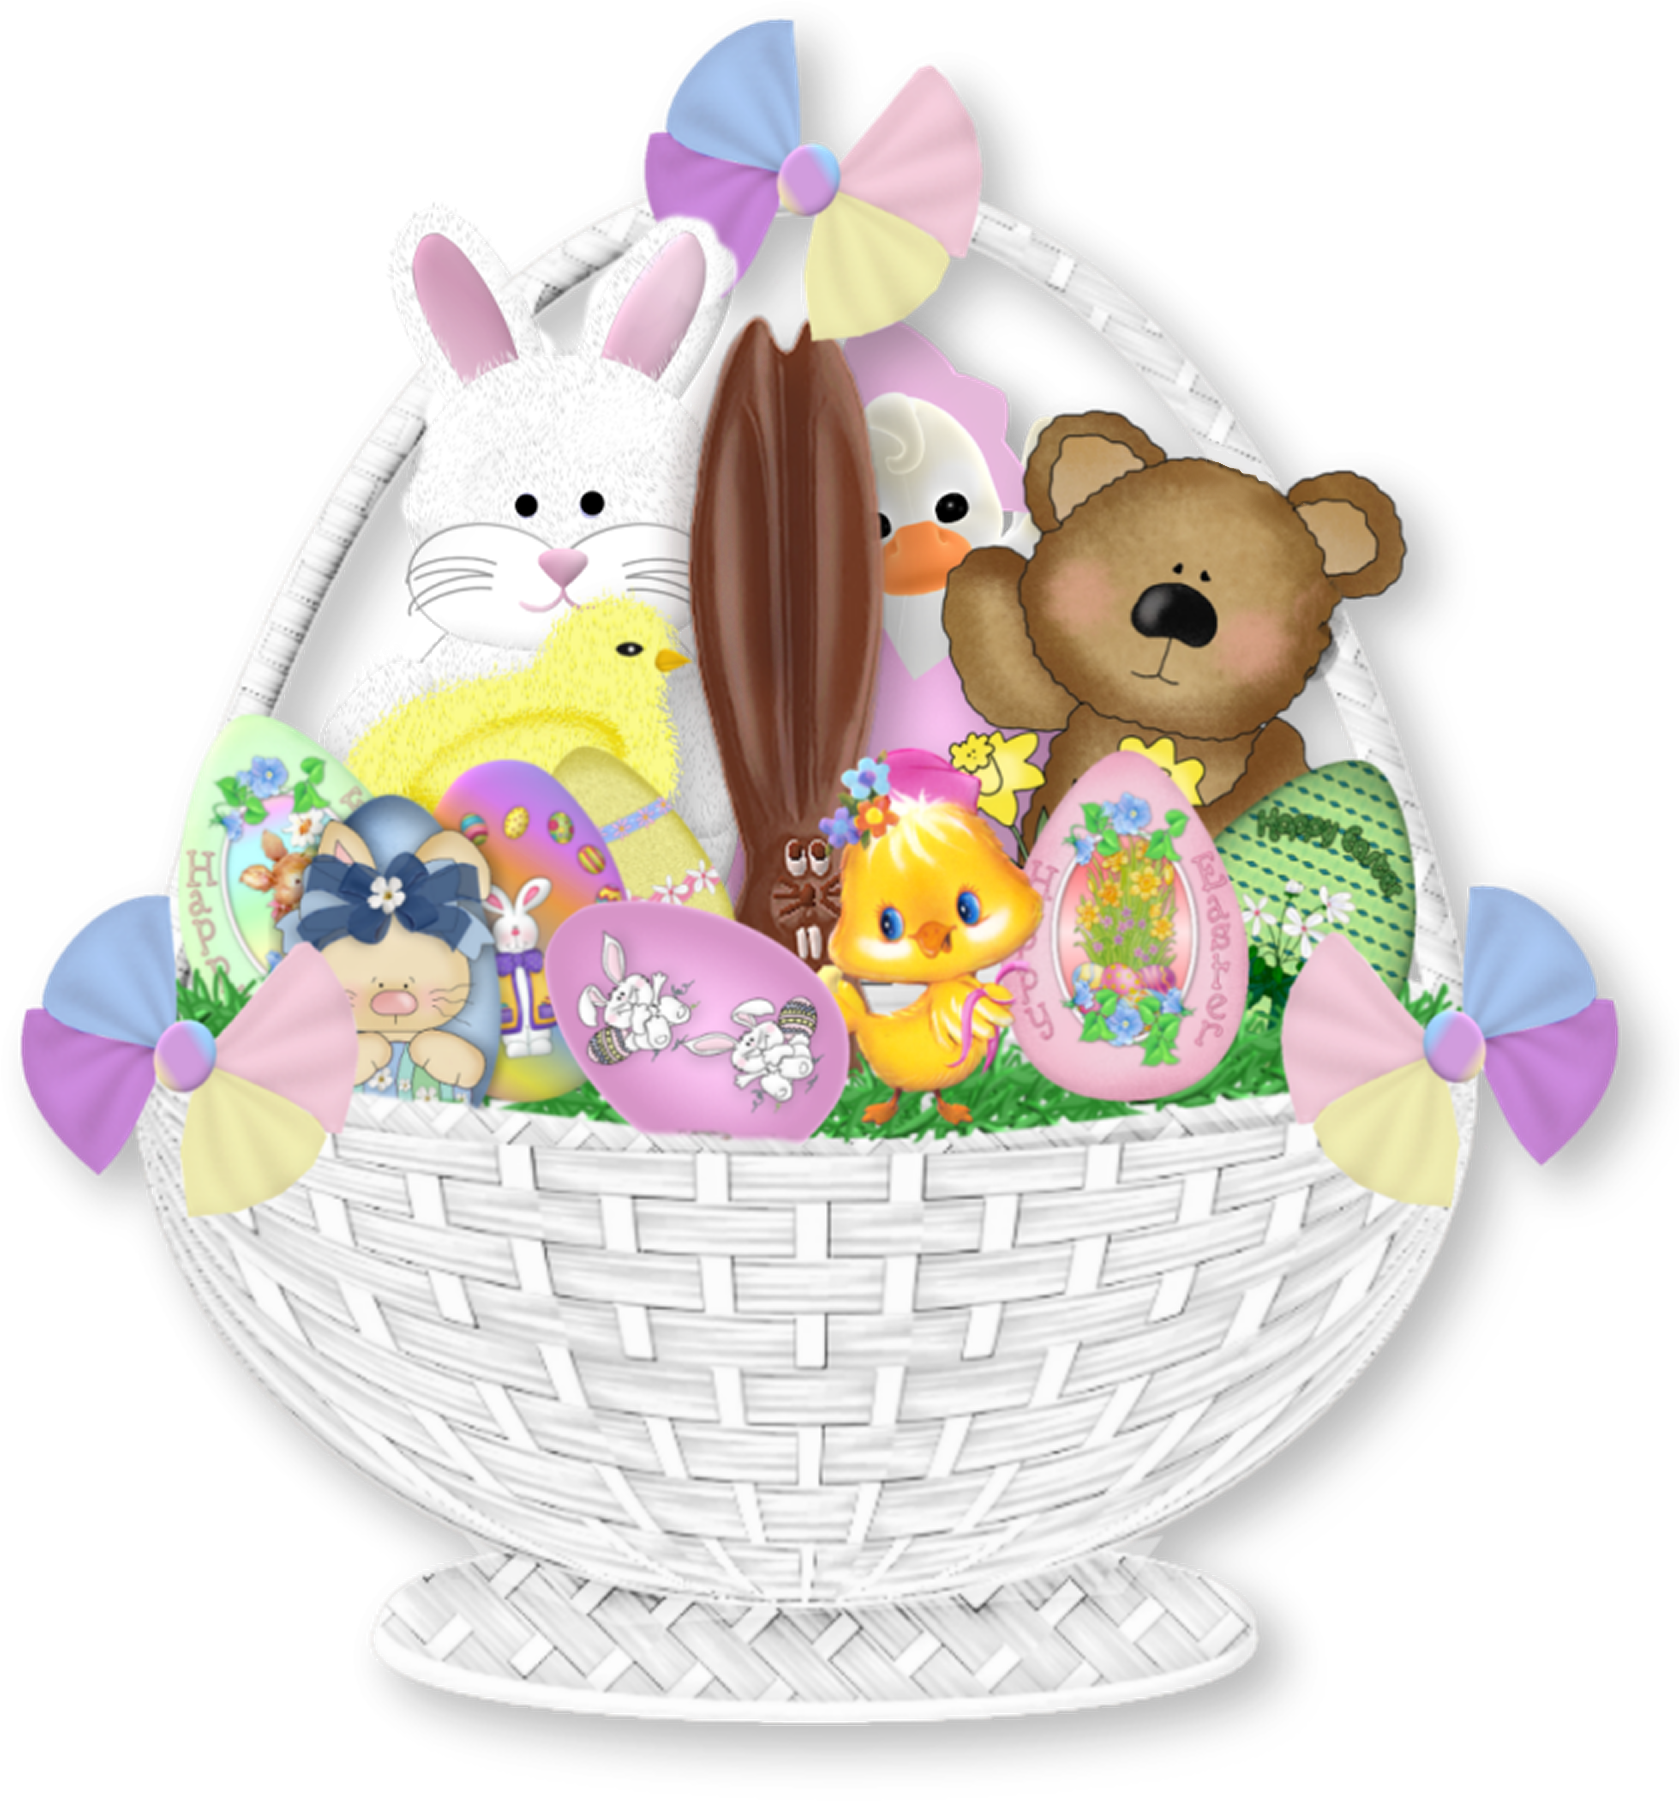 A Basket Full Of Stuffed Animals